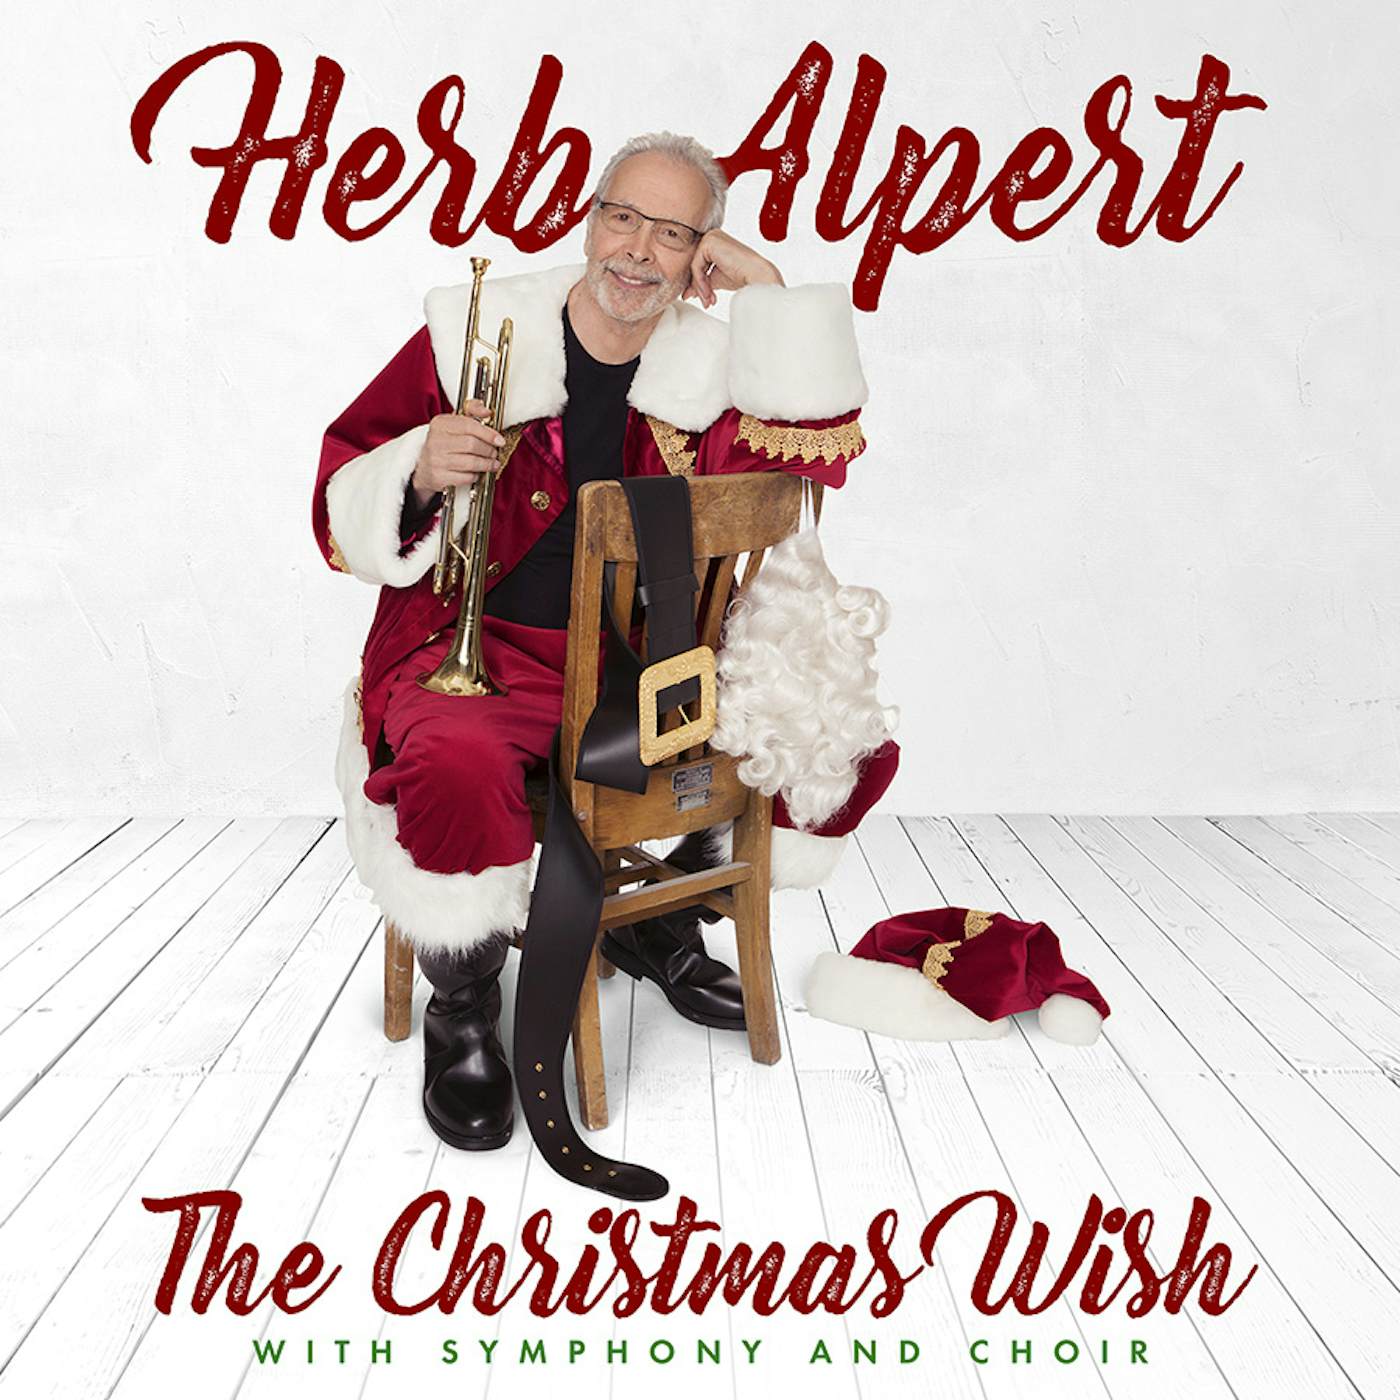 Herb Alpert CHRISTMAS WISH Vinyl Record